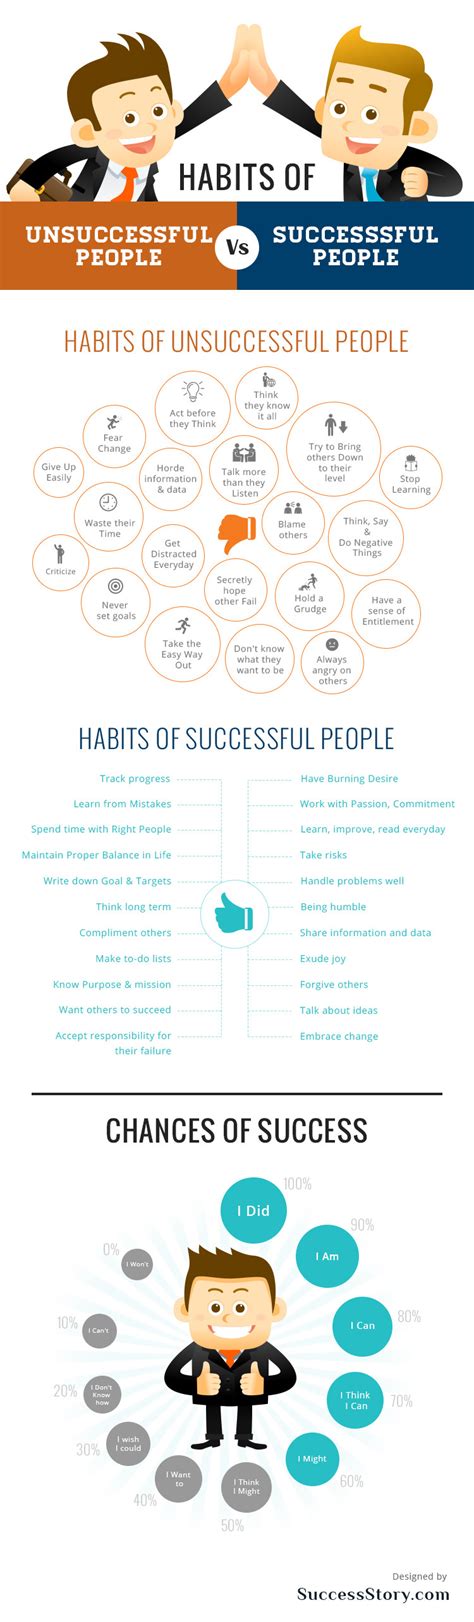 22 Vital Habits of Successful People | BrandonGaille.com